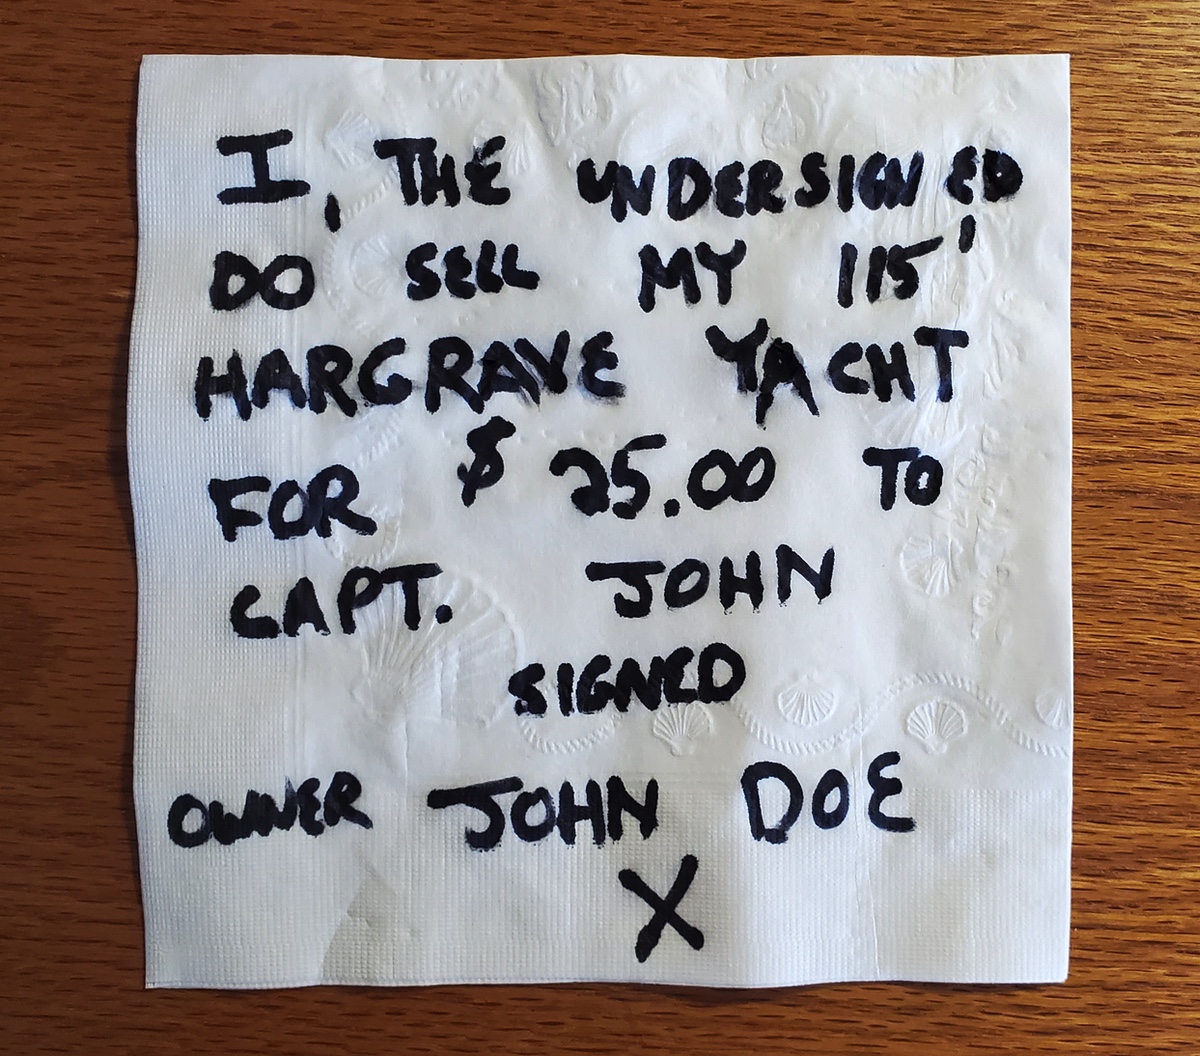 a napkin with a handwritten bill of sale